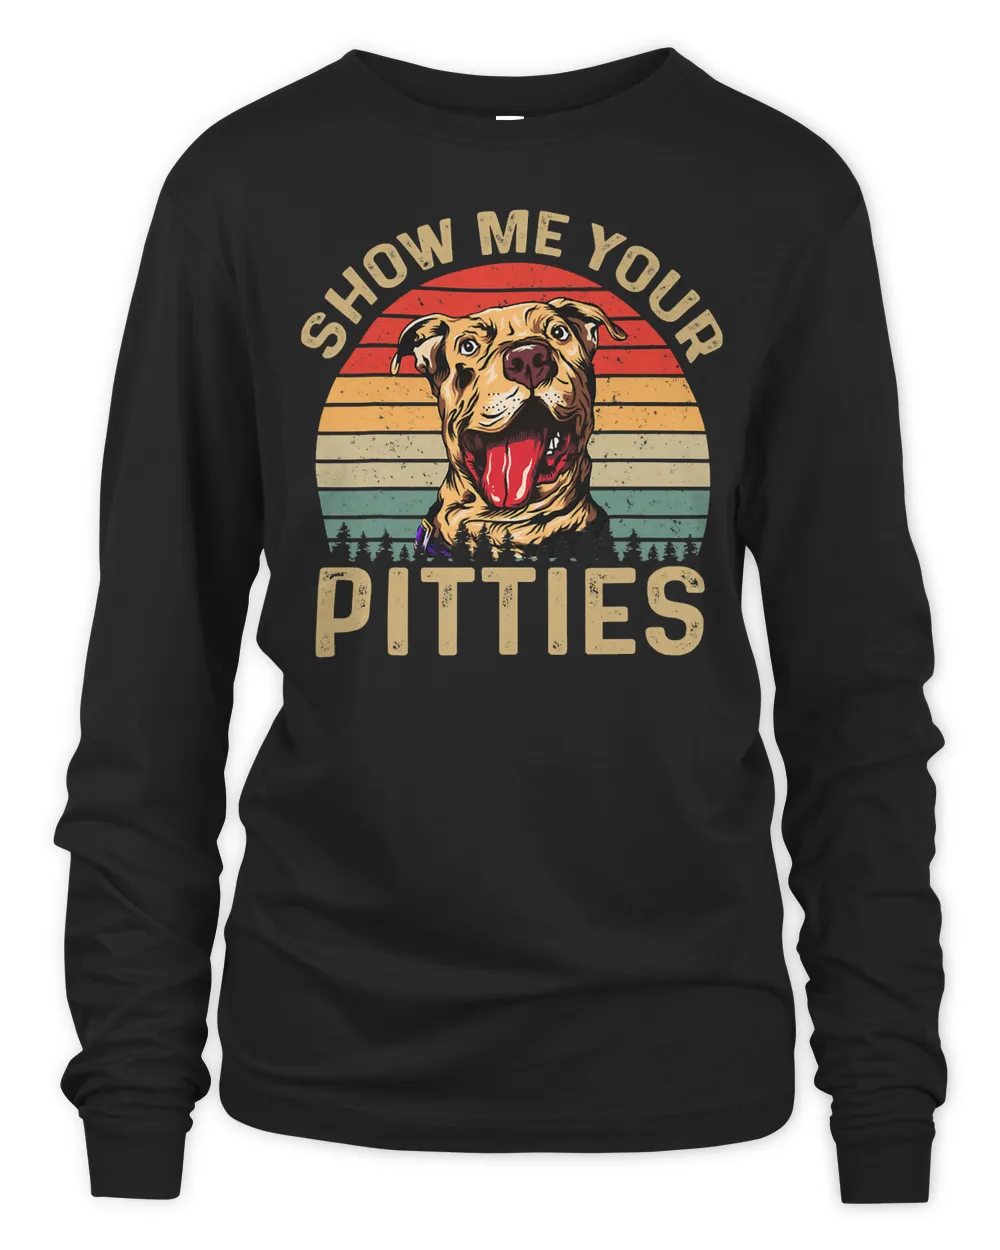 Pitbull Lover Dog Show Me Your Pitties Funny Pitbull Dog Lovers Retro Vintage 291 Pitbulls